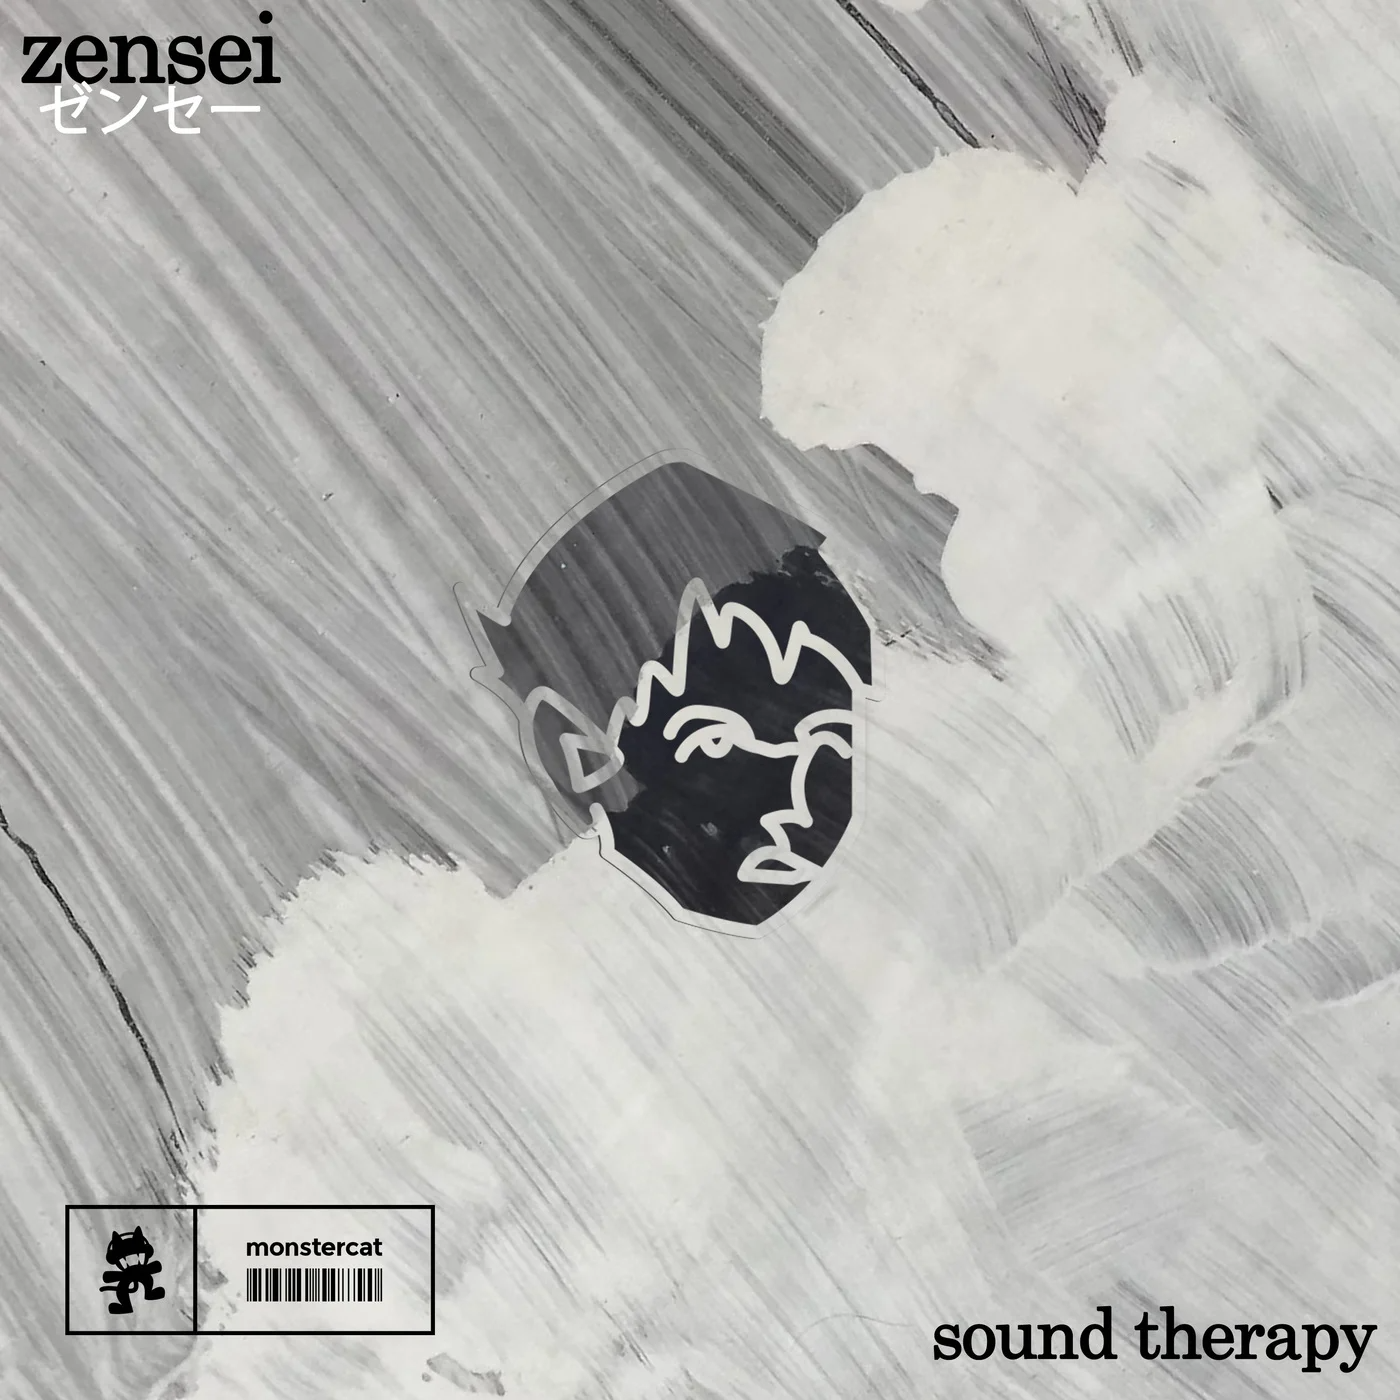 Zensei ゼンセー sound therapy Album Zip Download